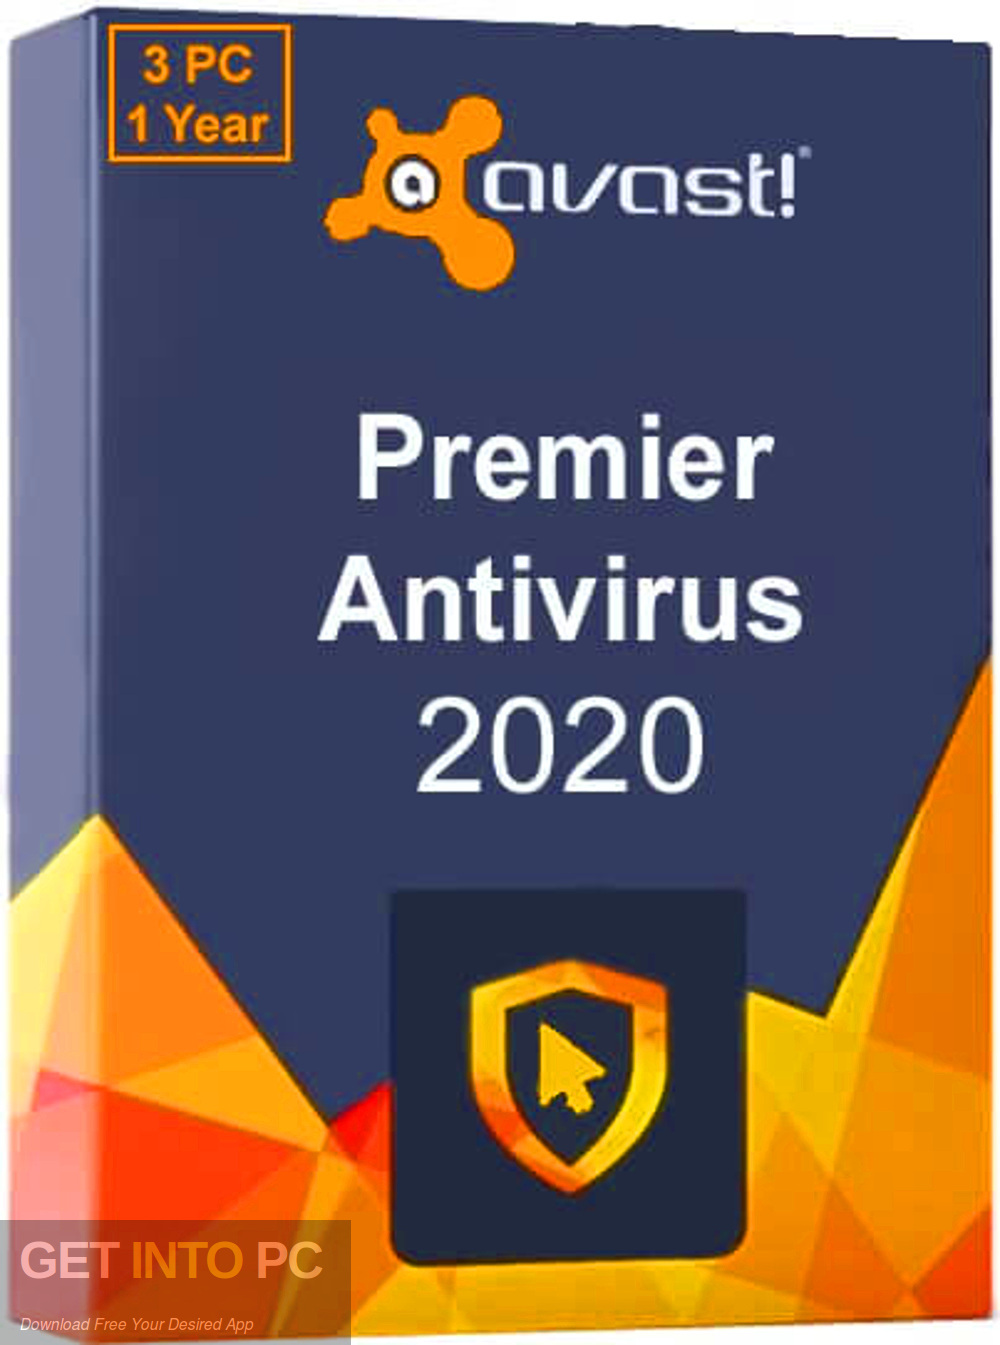 Download avast antivirus cracked version